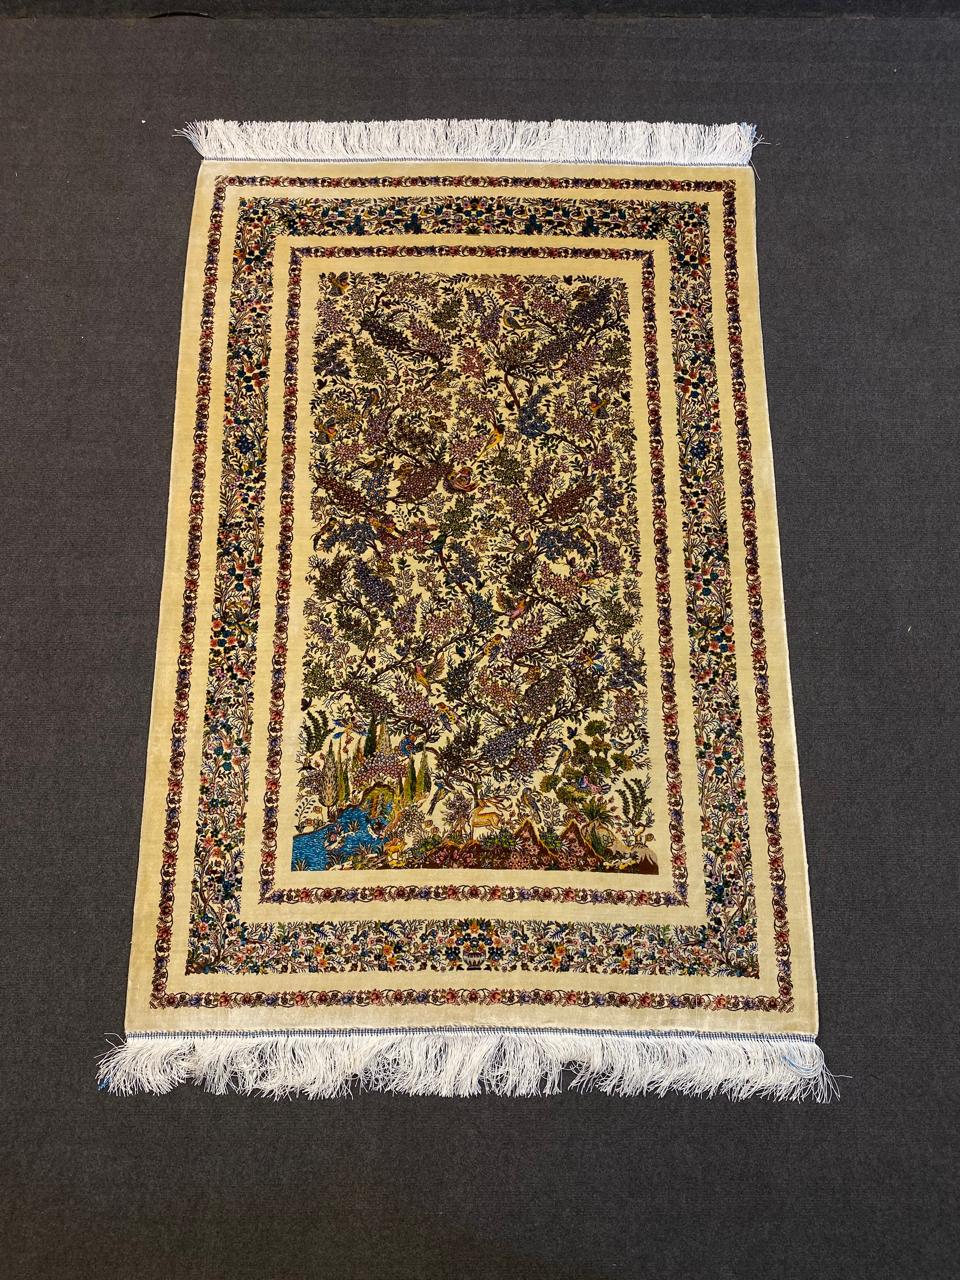 Iranian Pure Silk Carpets 3x5ft.